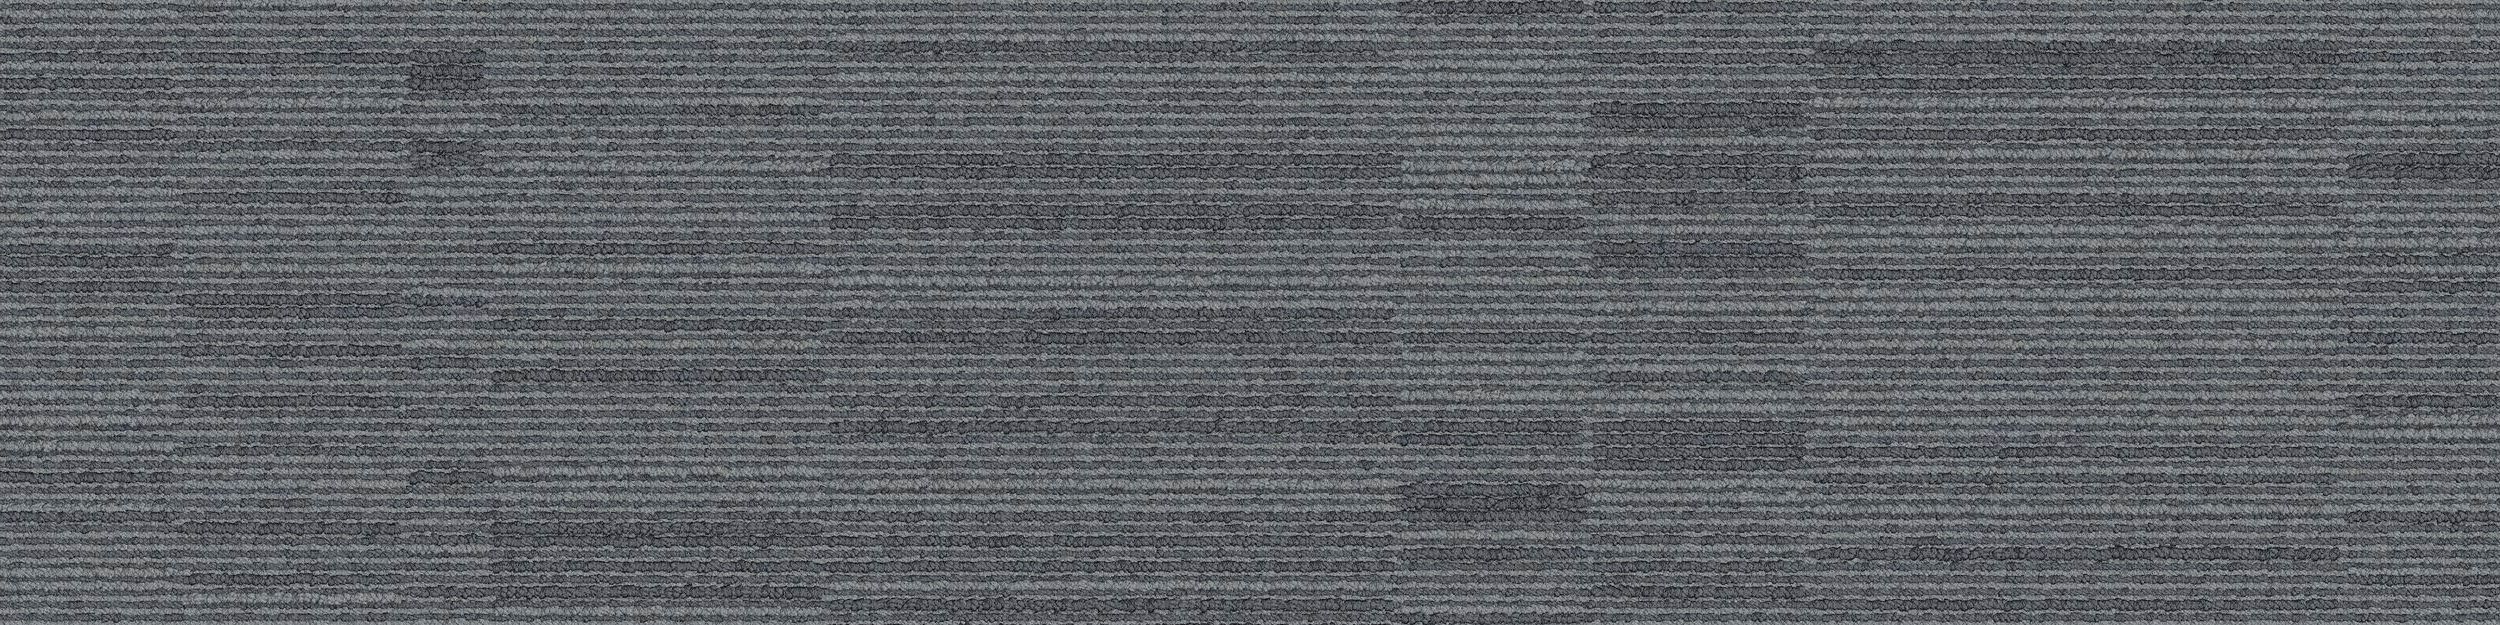 B702 Carpet Tile In North Sea image number 2